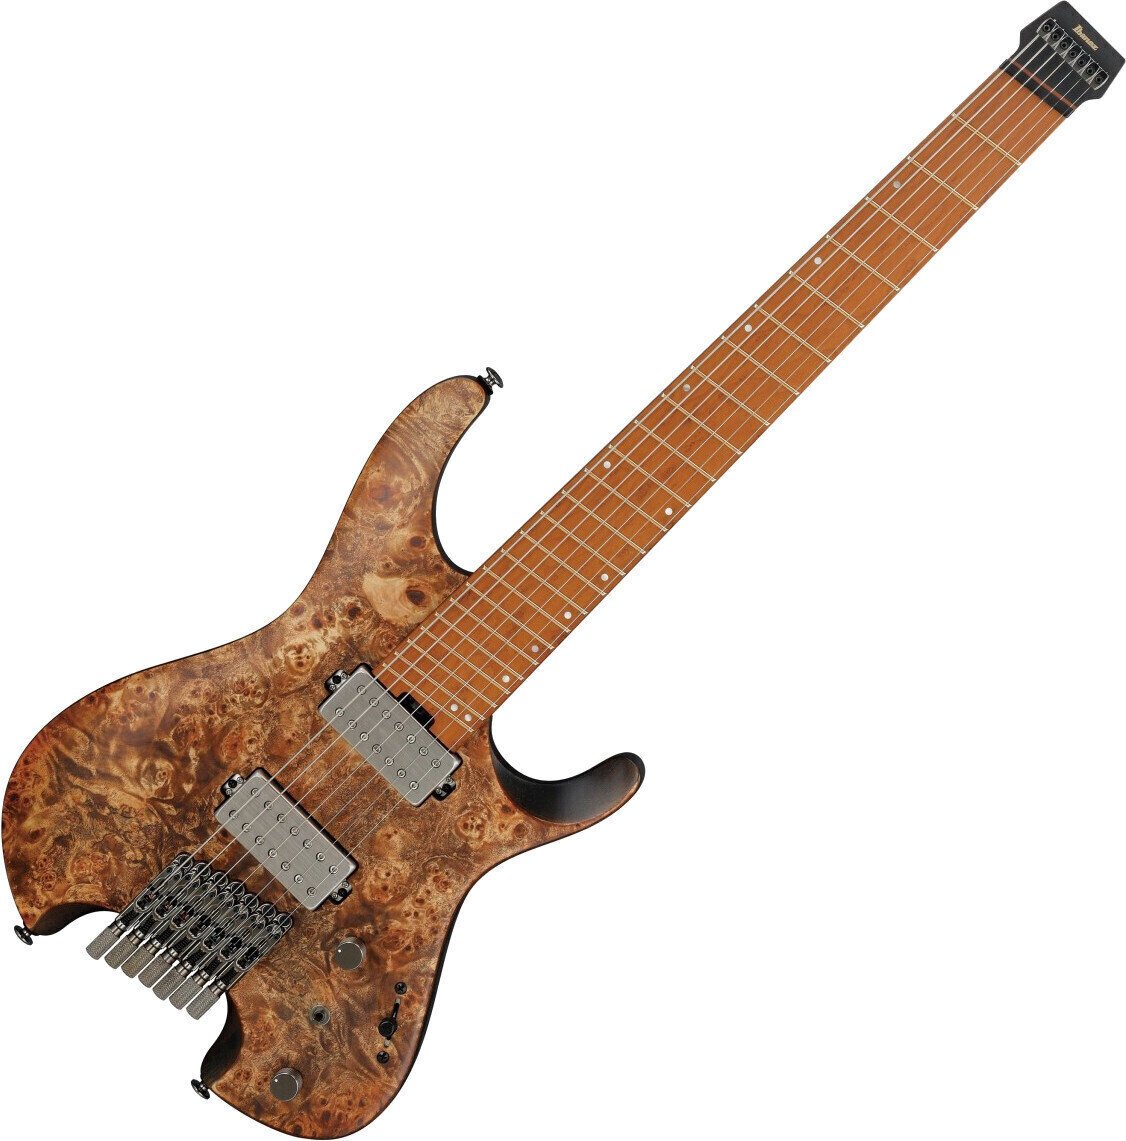 Guitarra sem cabeçalho Ibanez QX527PB-ABS Antique Brown Stained